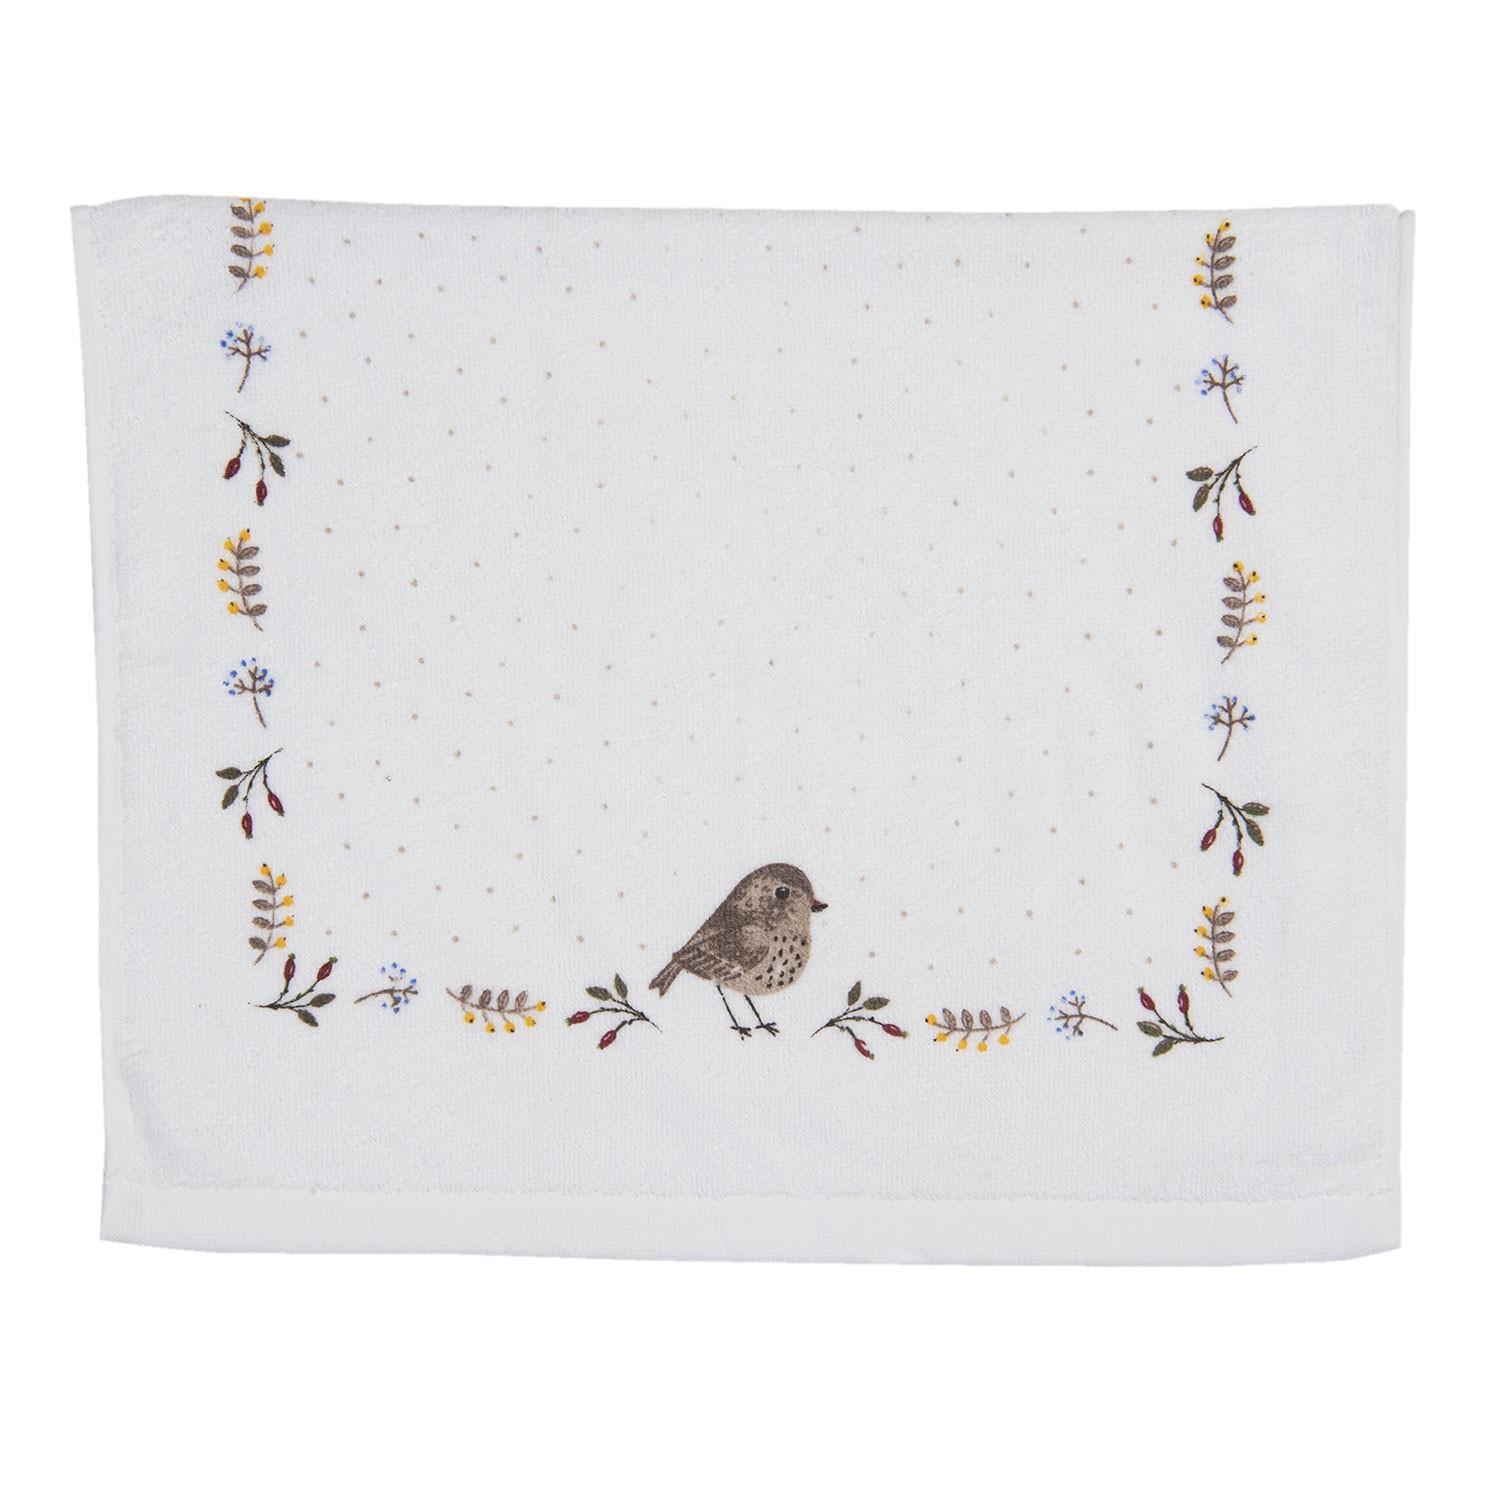 Kuchyňský froté ručník s motivem ptáčka Moineau - 40*66 cm Clayre & Eef